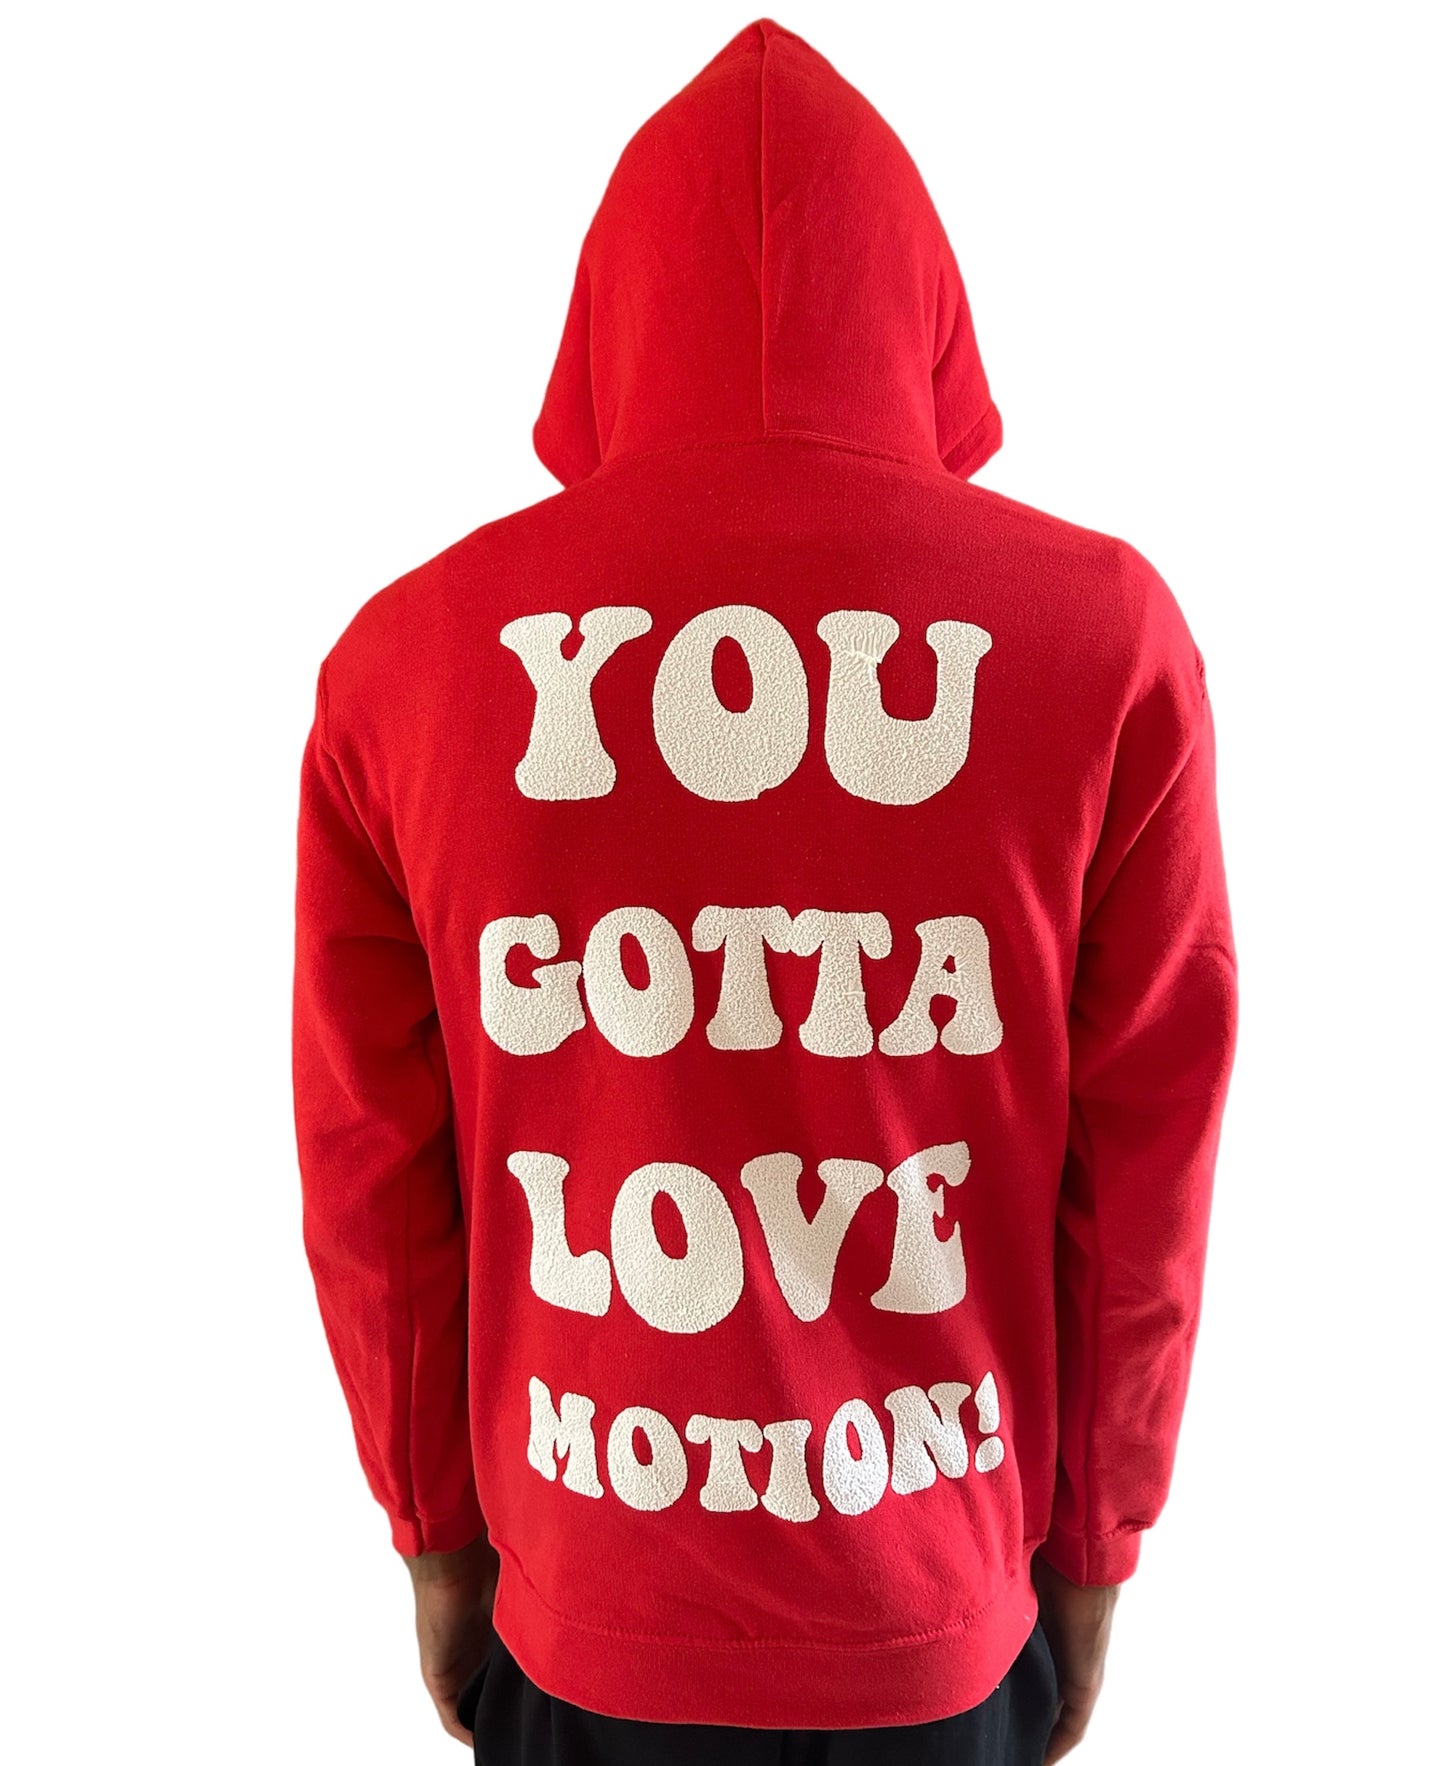 "Gotta Love Motion" Puff Print Hoodie